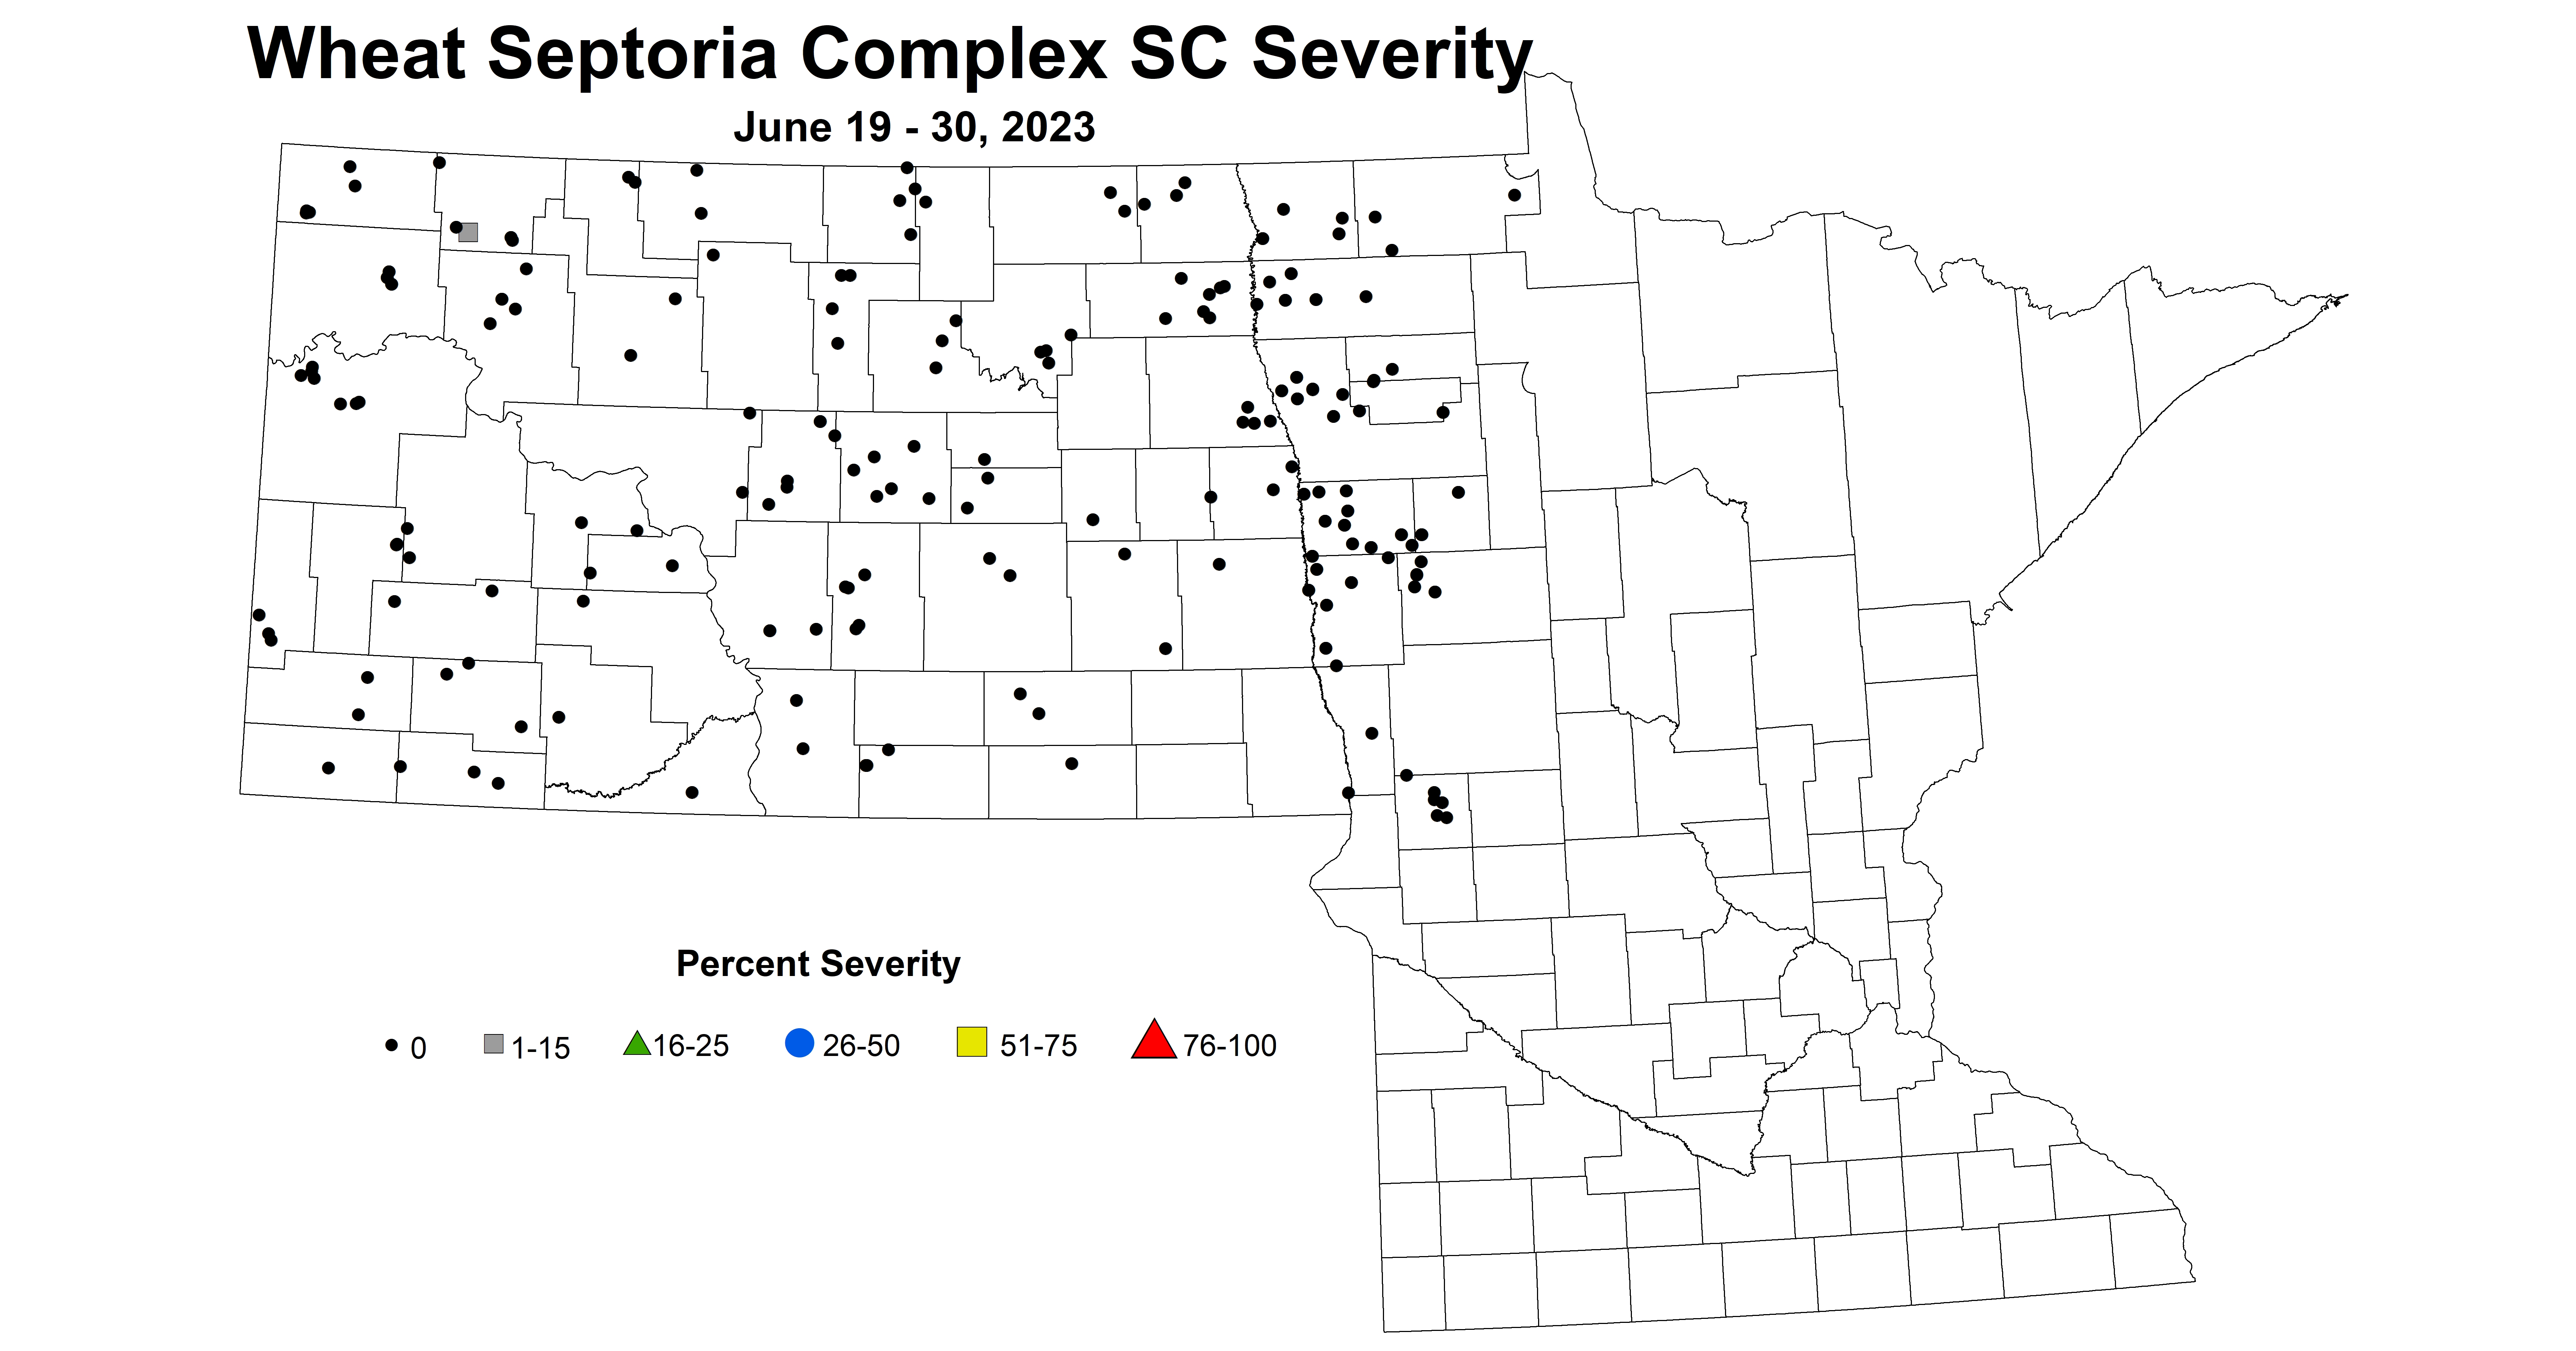 wheat septoria complex severity June 19-30 2023